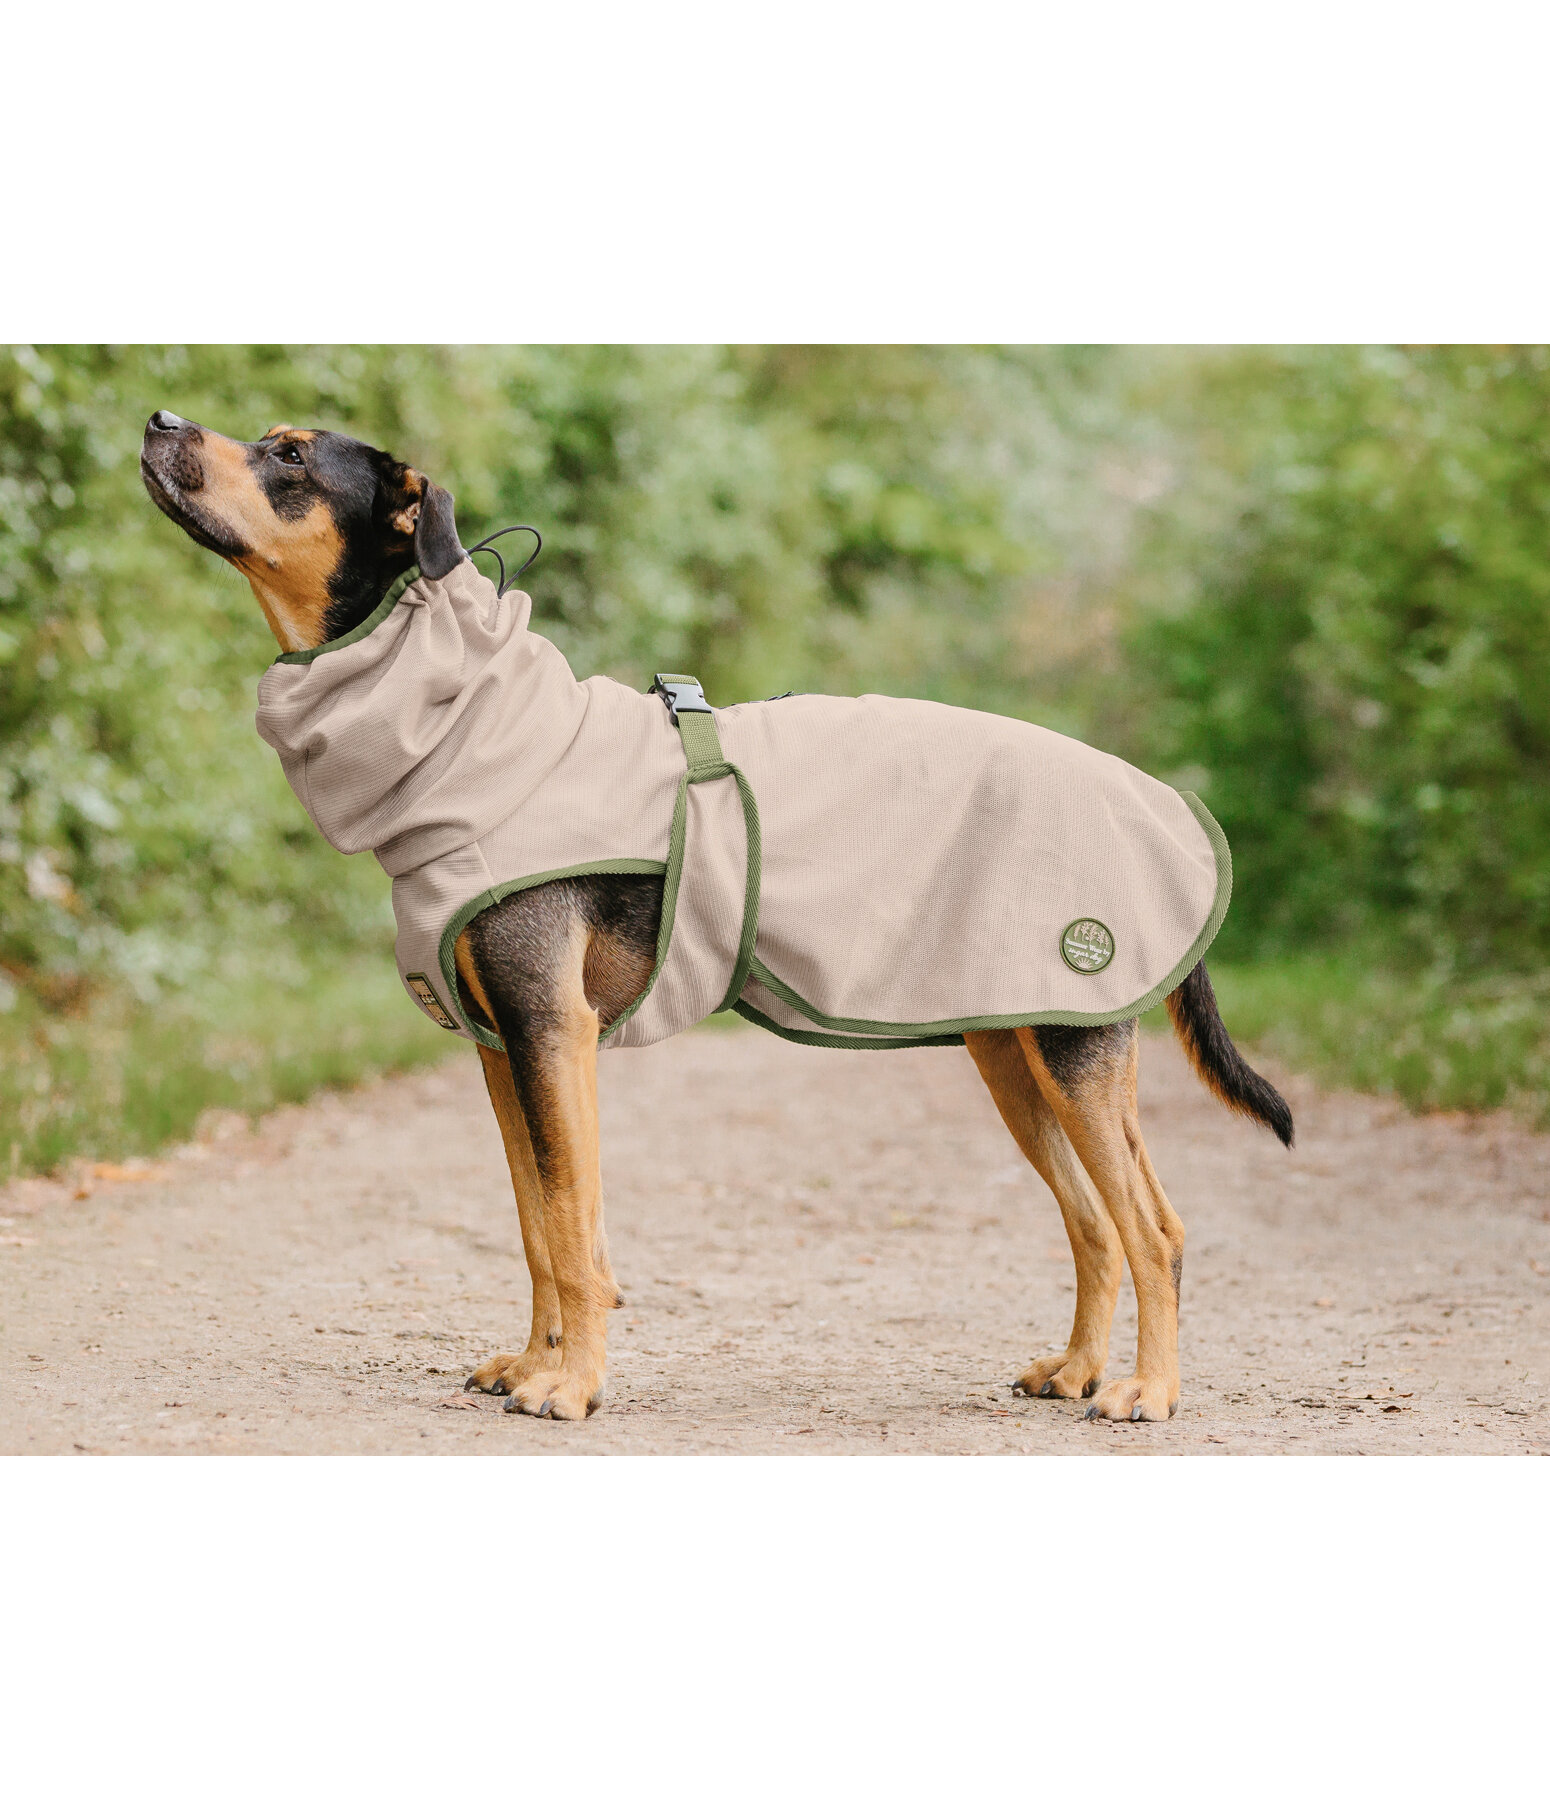 Manteau anti-mouches pour chien  Taiga